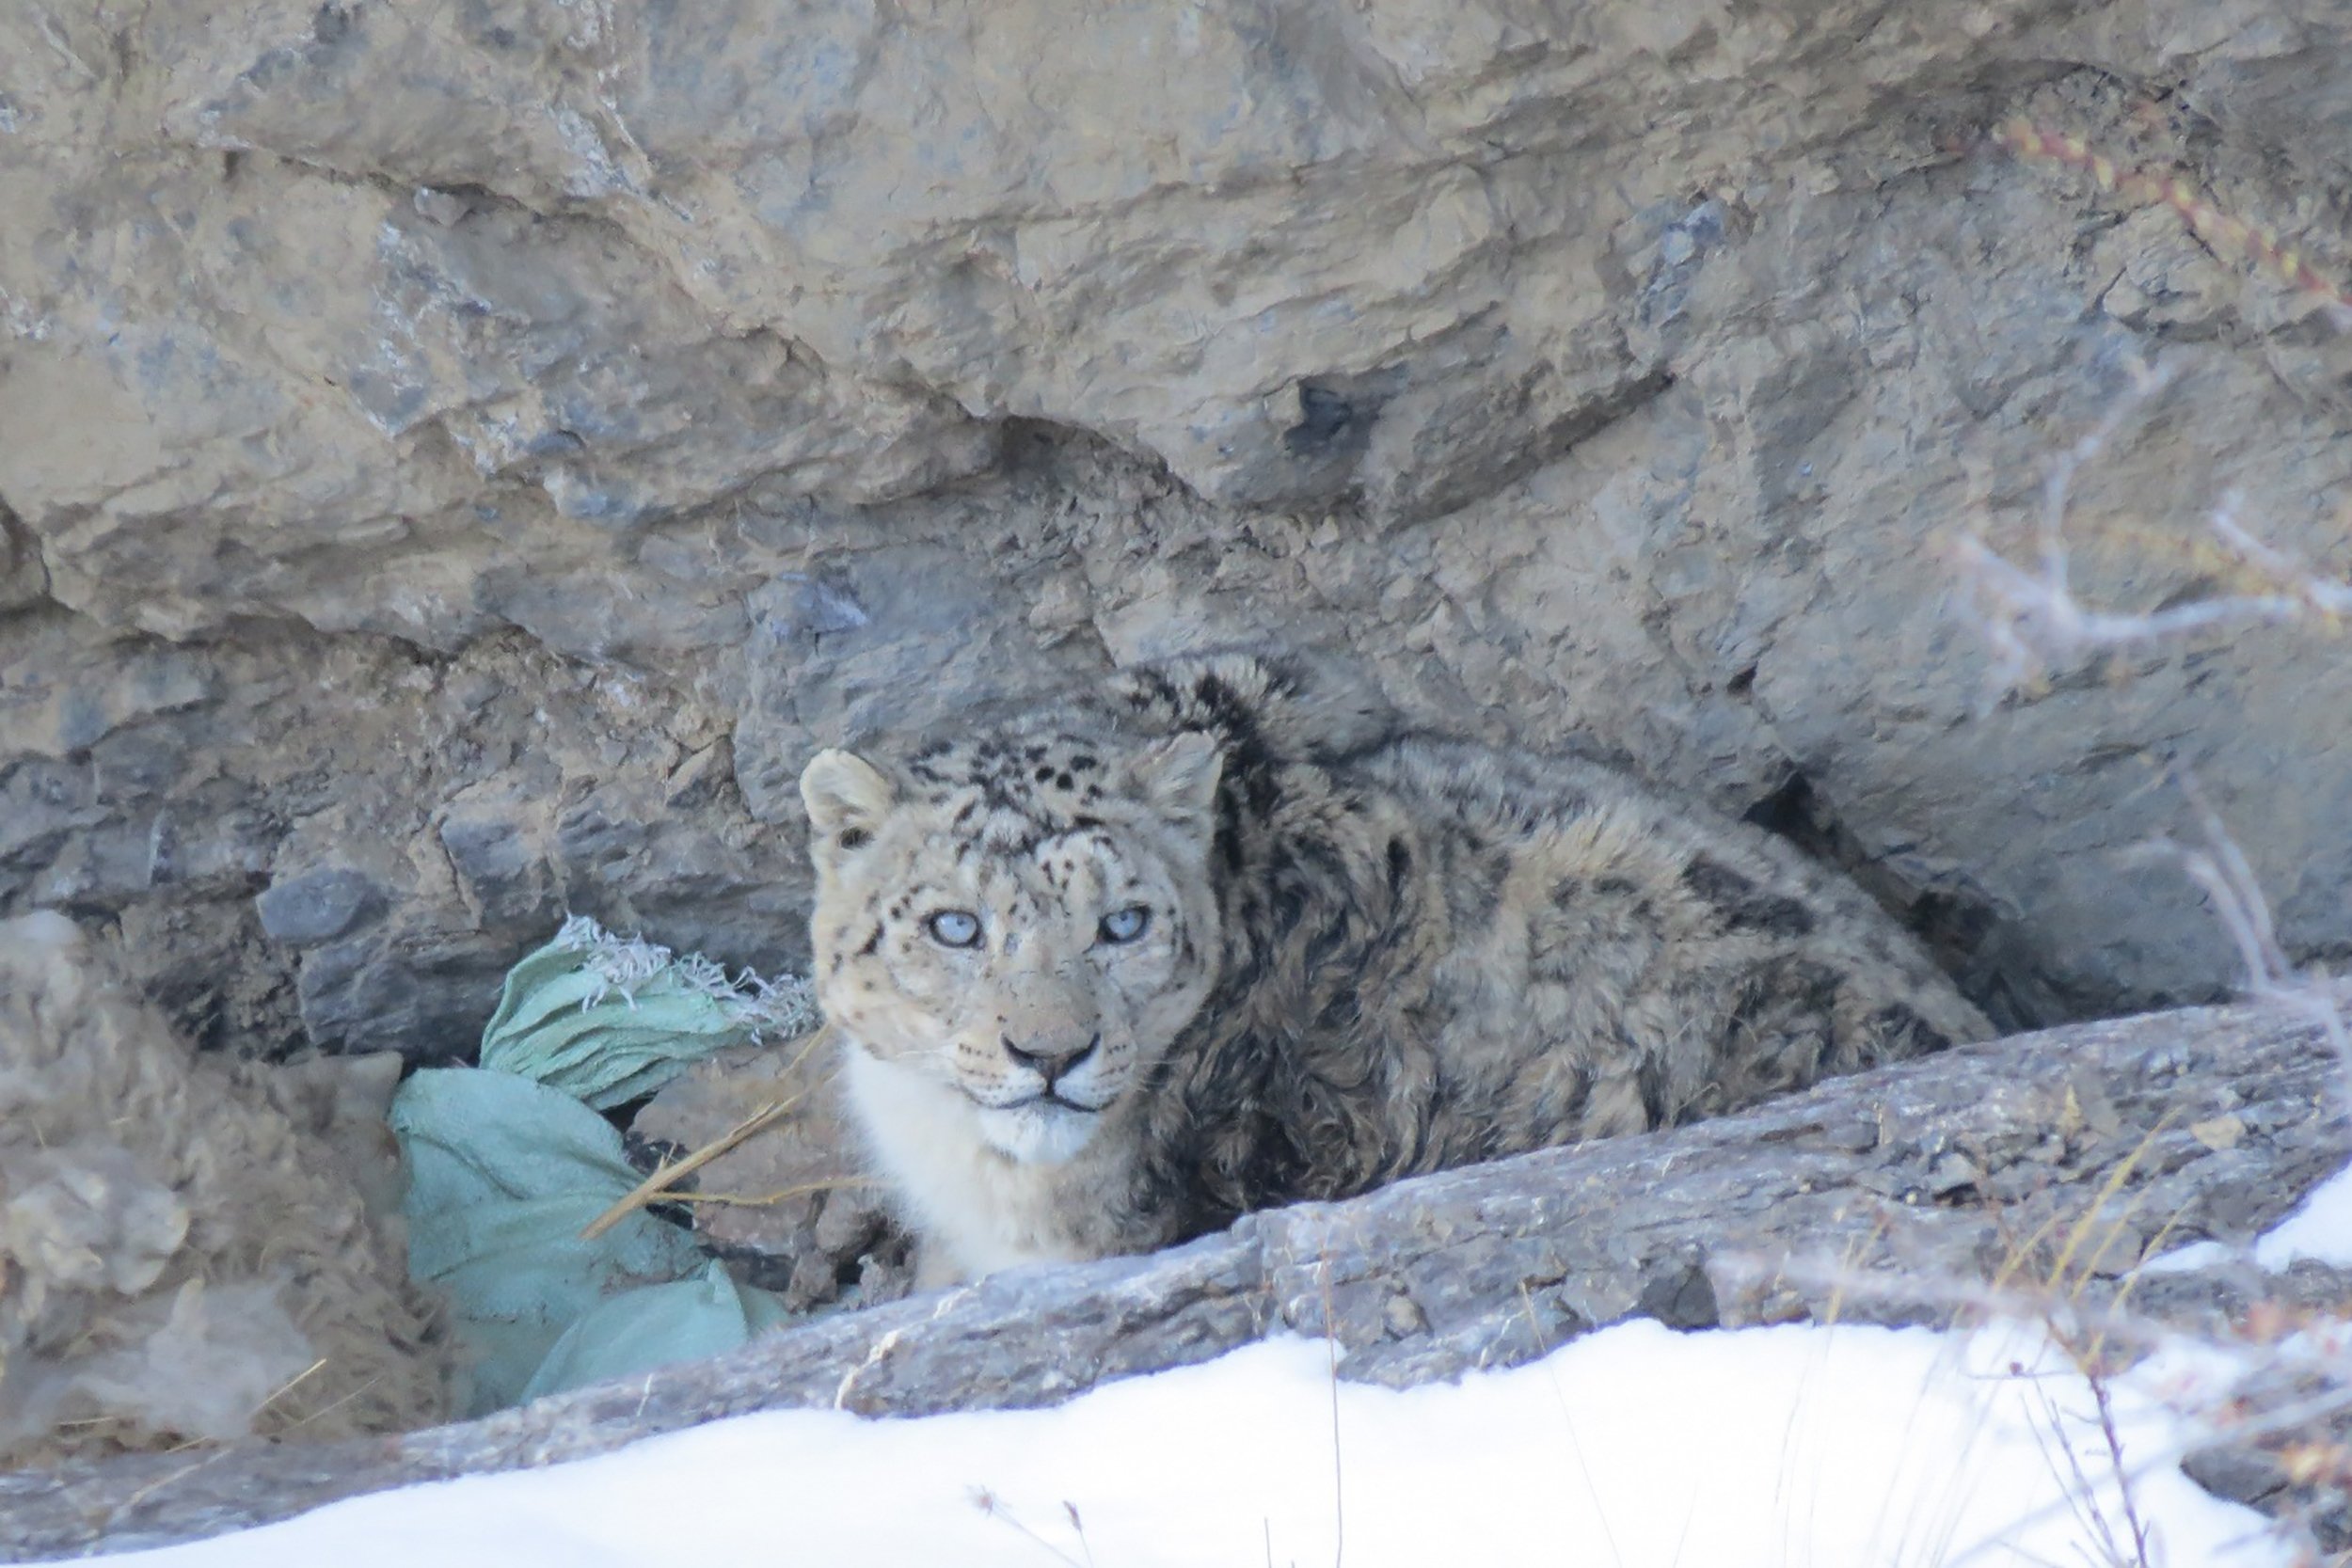 A snow leopard in Uttarakhand [image by: Sonu Negi]